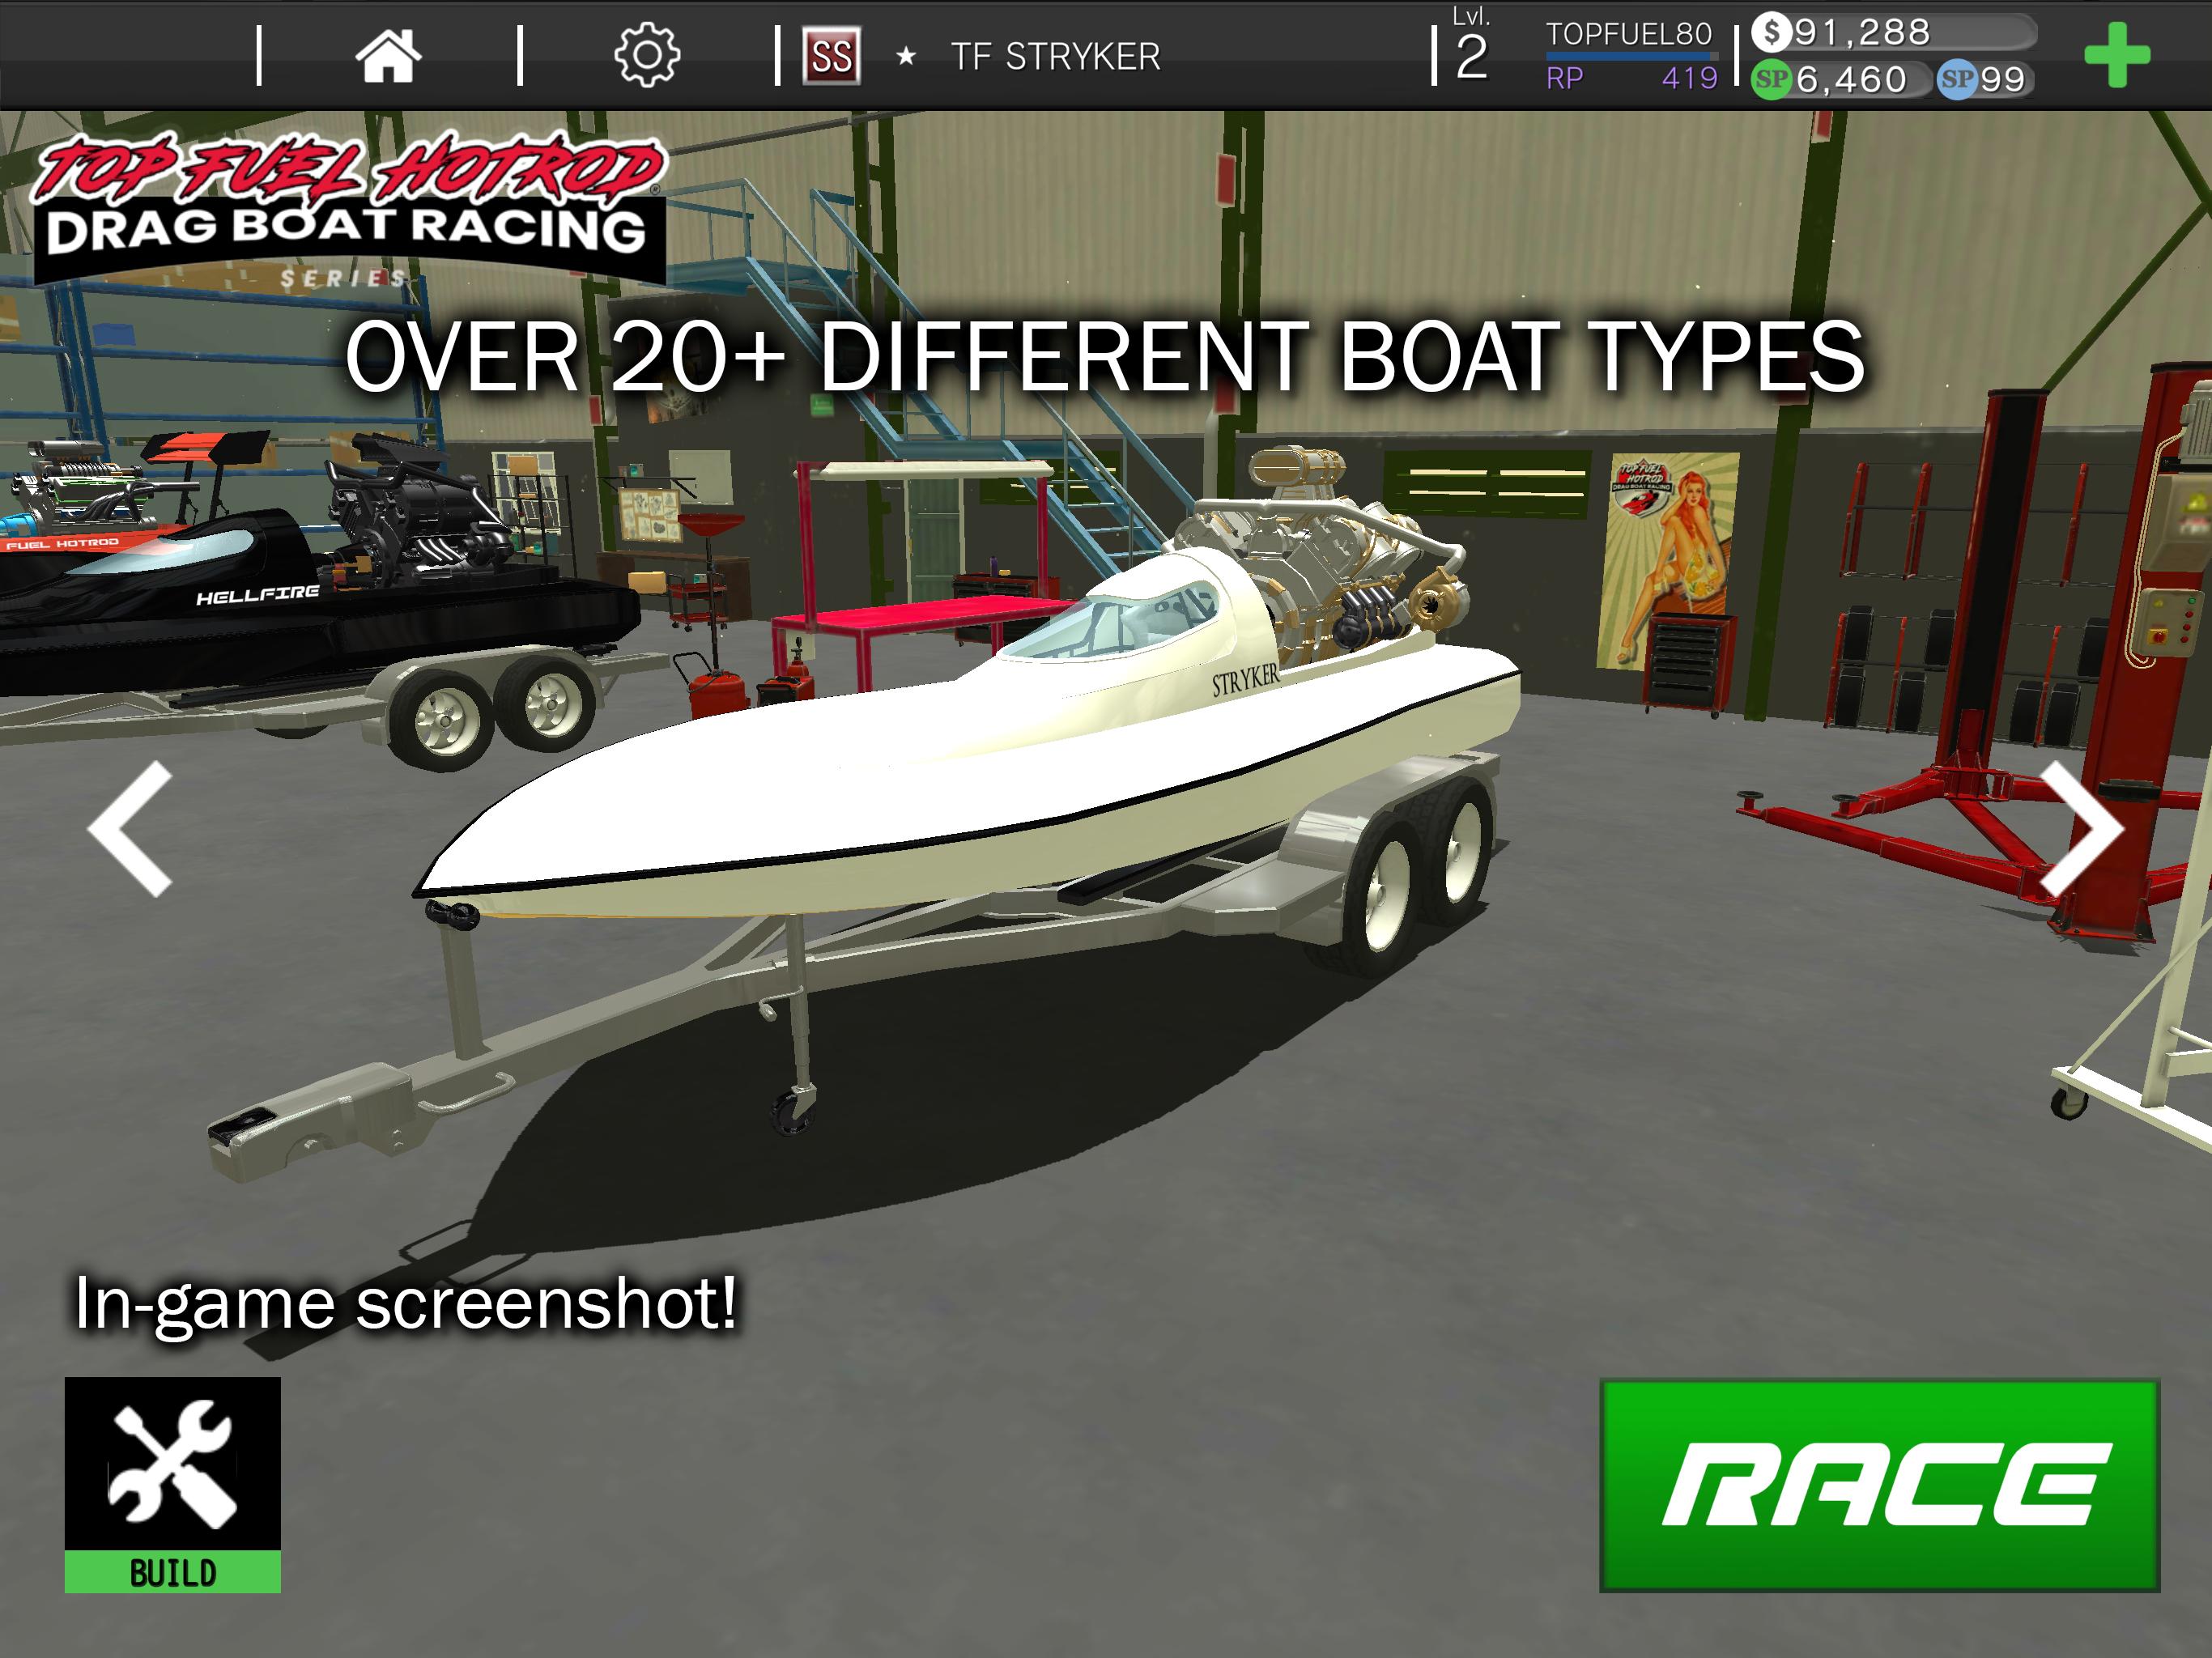 Top Fuel Hot Rod - Drag Boat Speed Racing Game 1.16 Screenshot 23